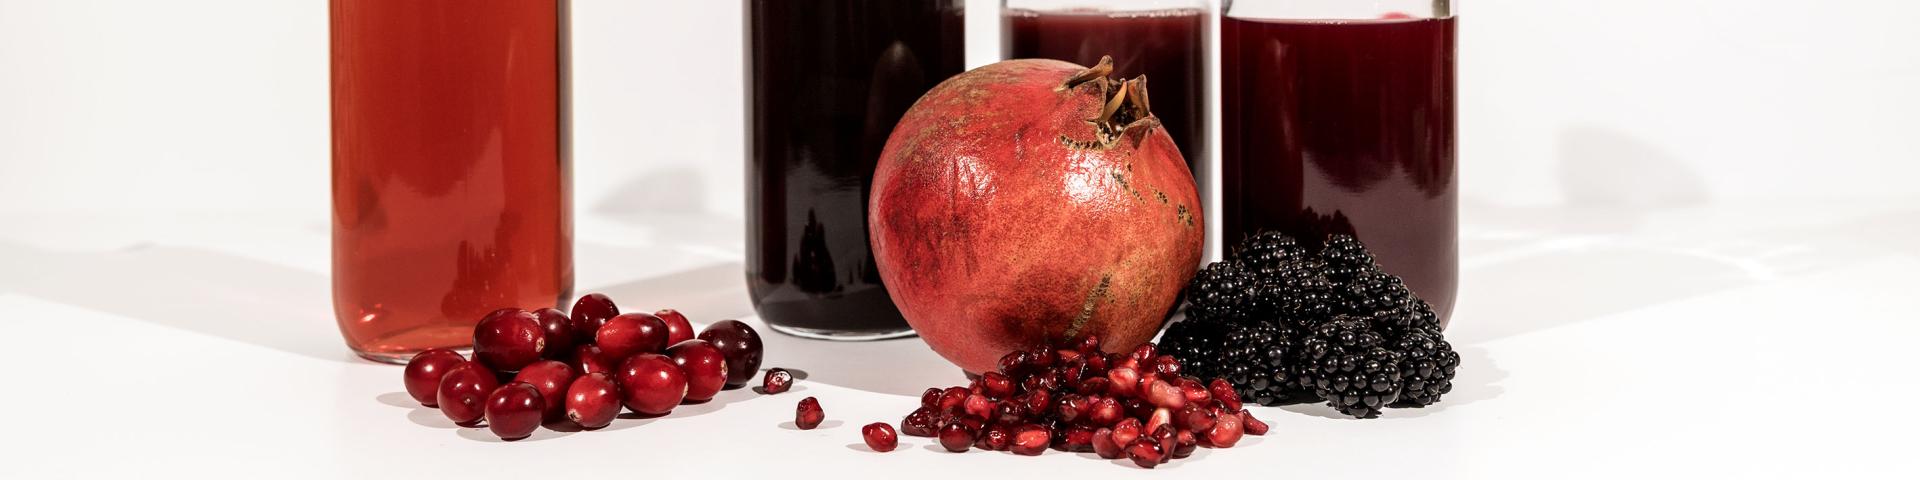 Pomegranate Juice Concentrate - iffs